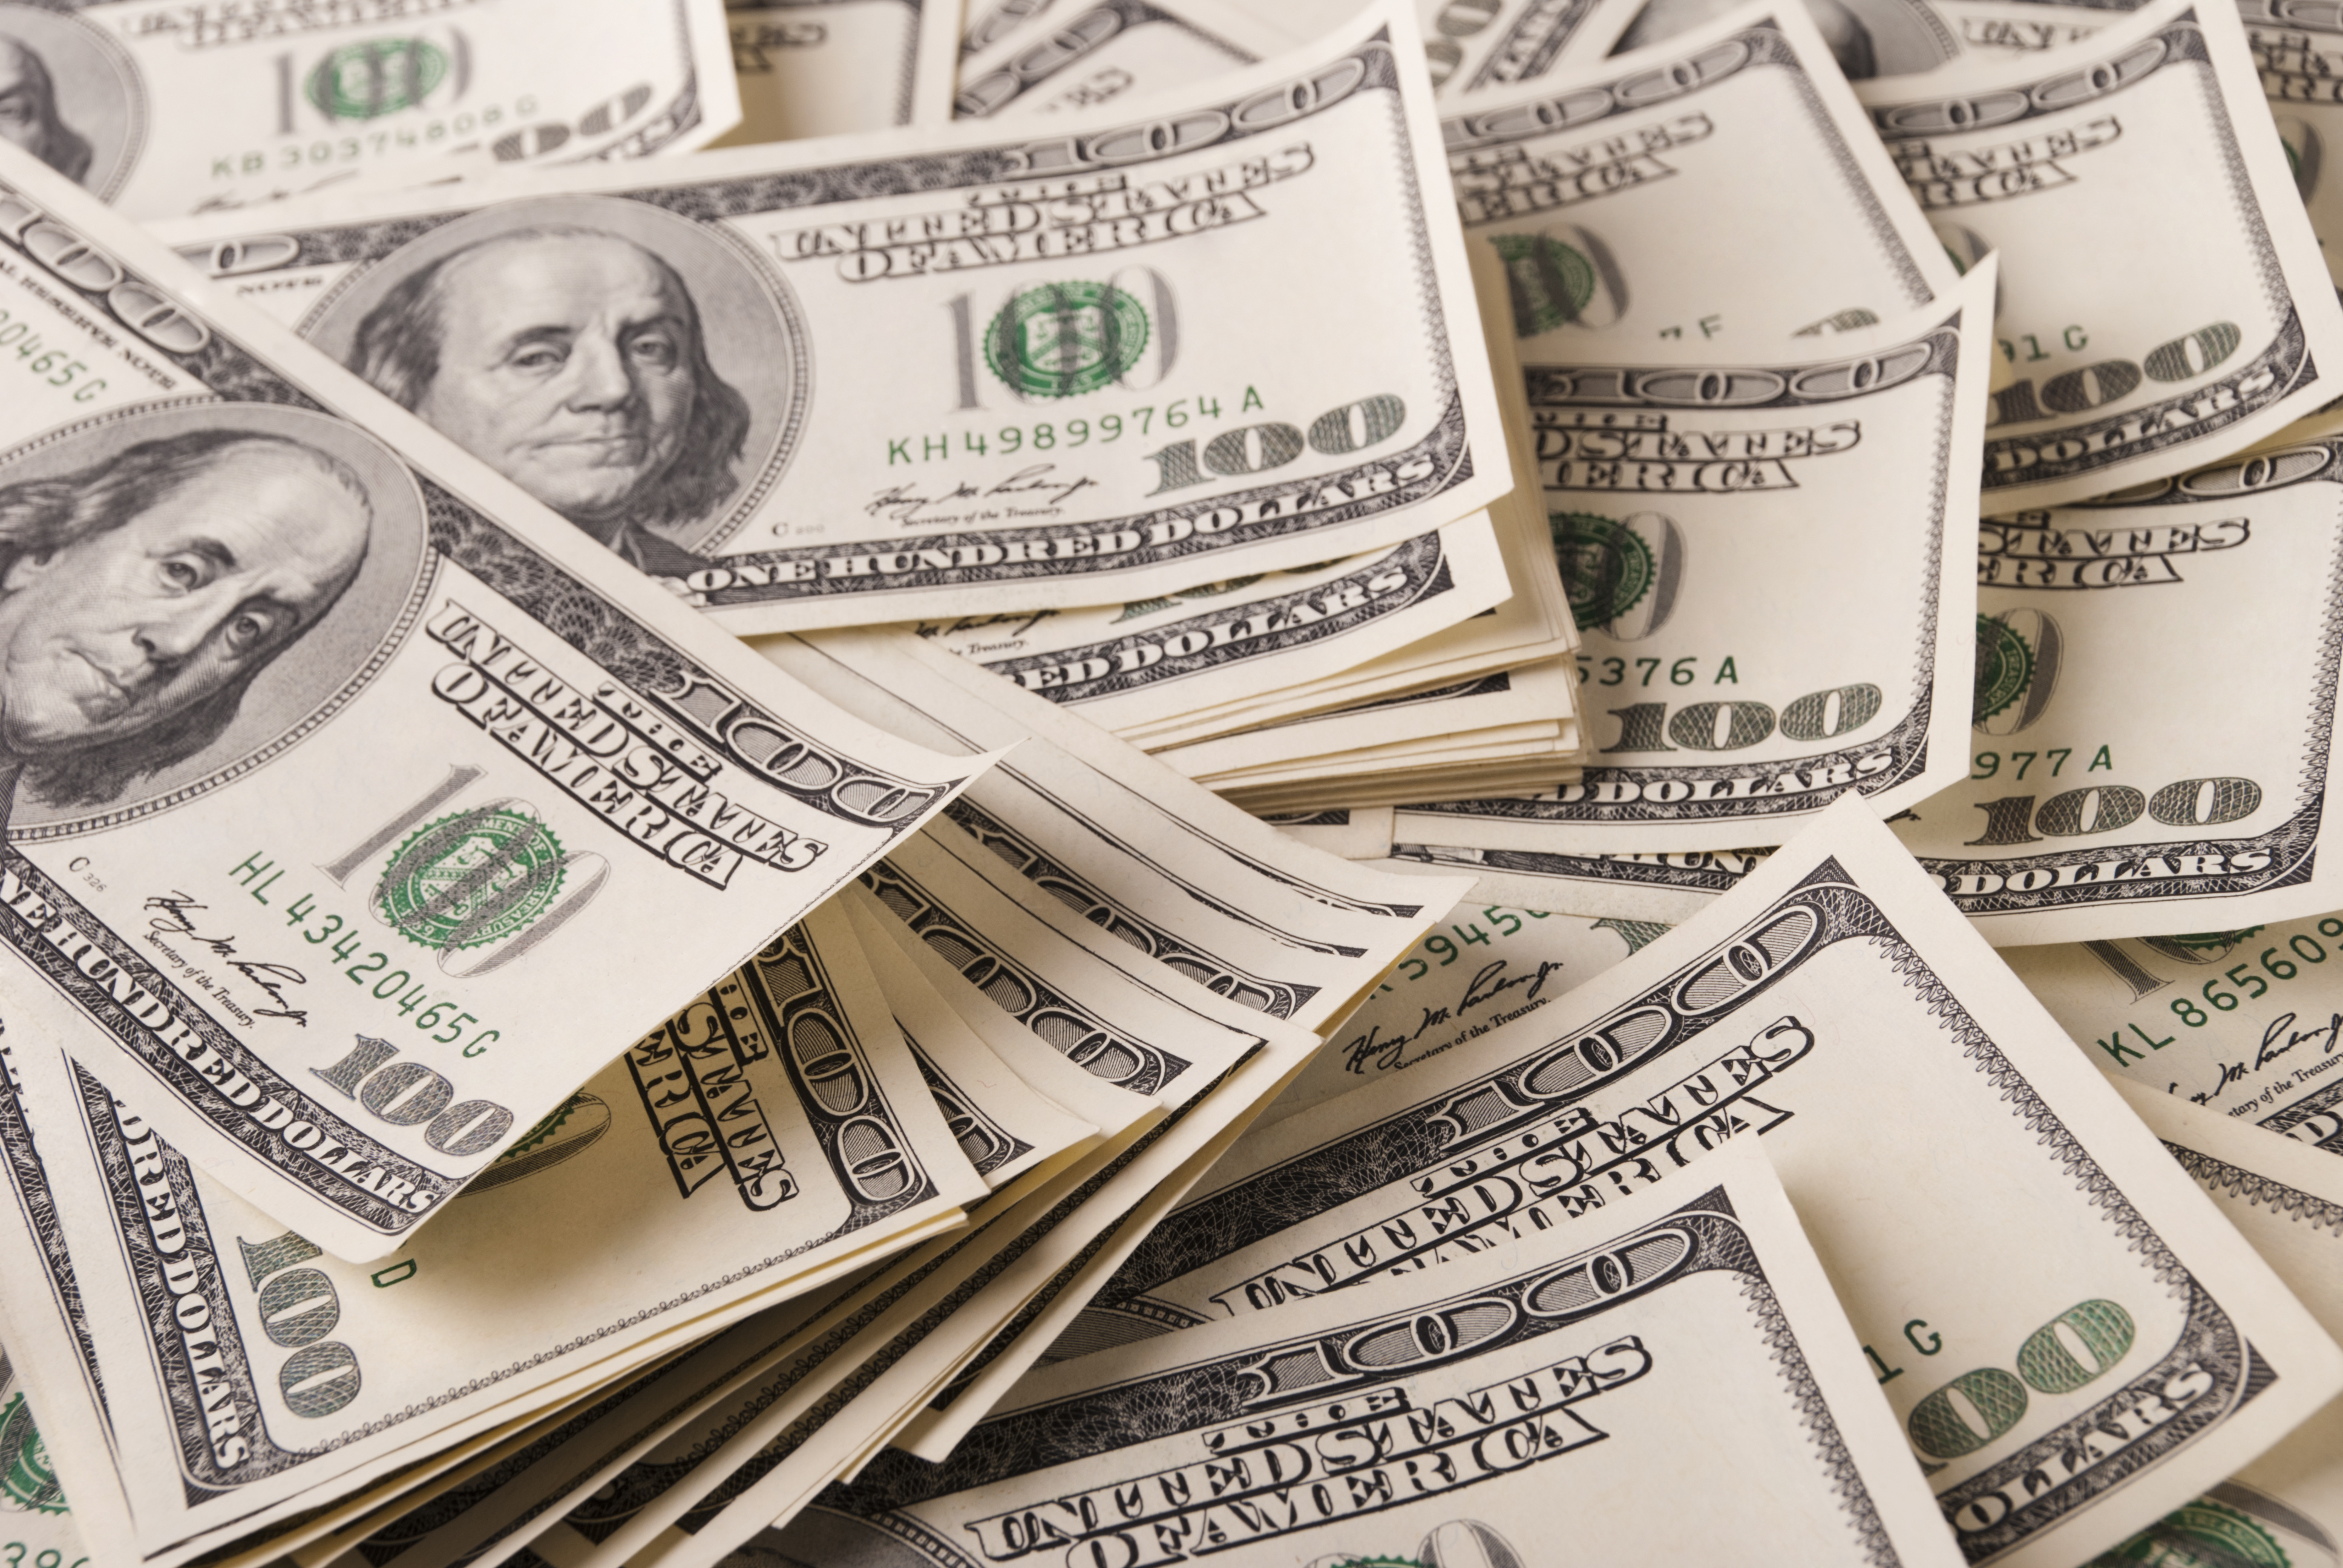 A pile of money | Source: Shutterstock